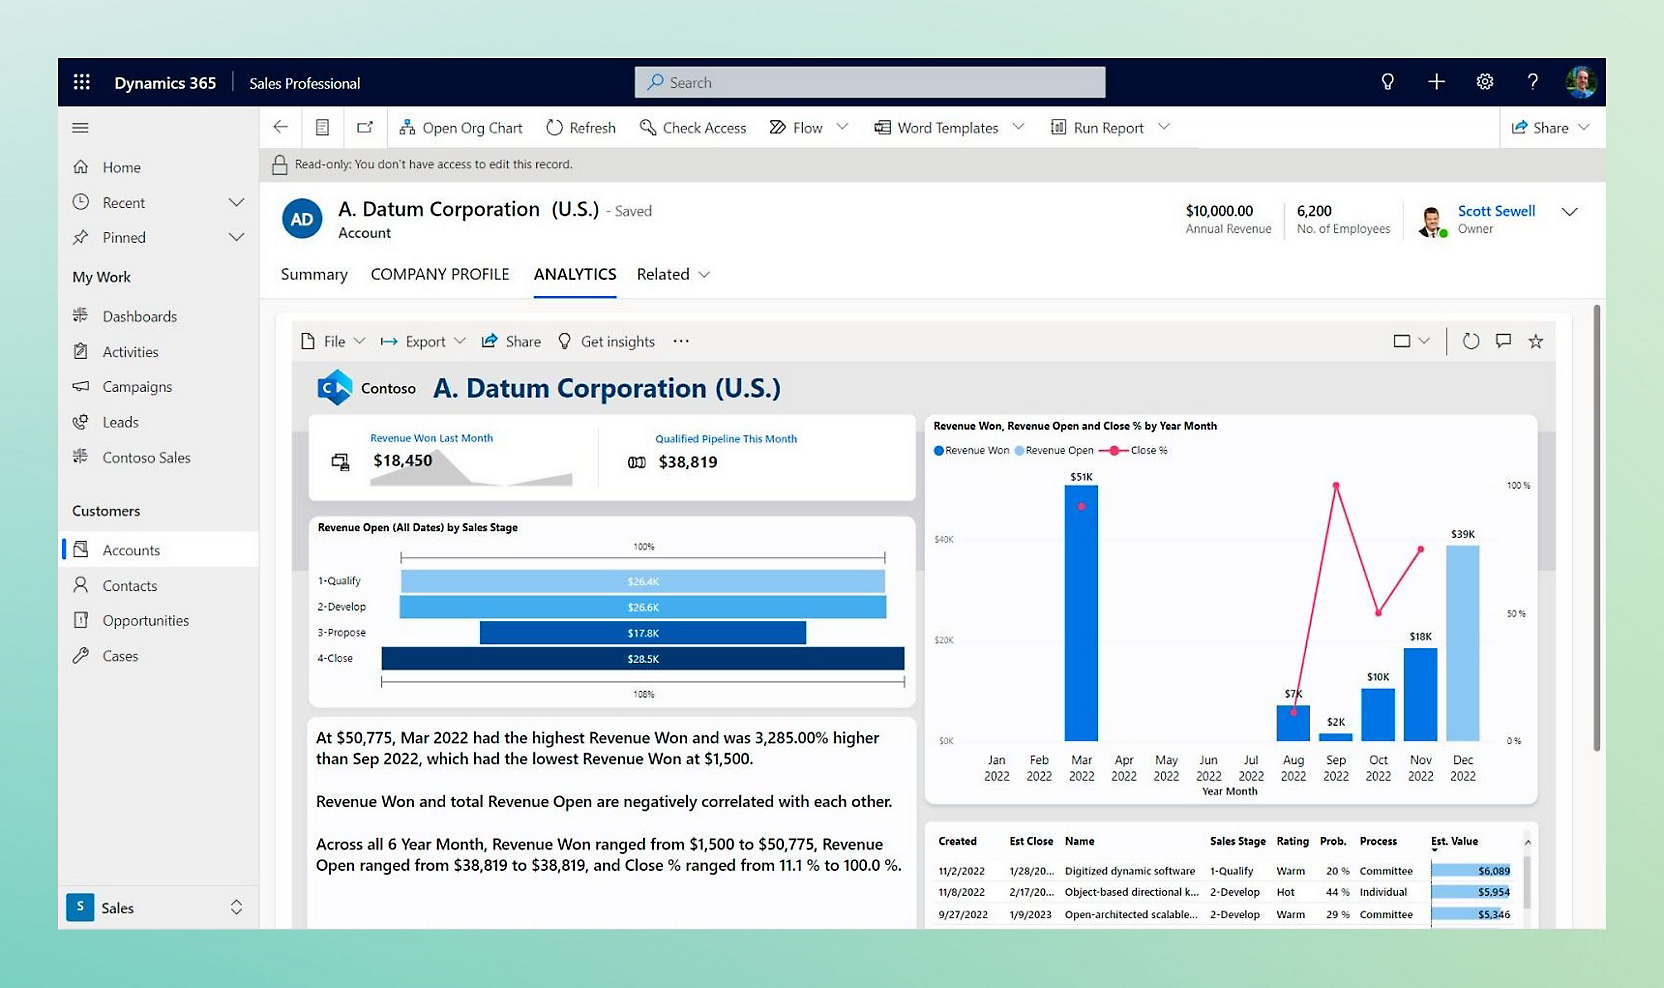 Снимок экрана: панель мониторинга отчетов о клиентах